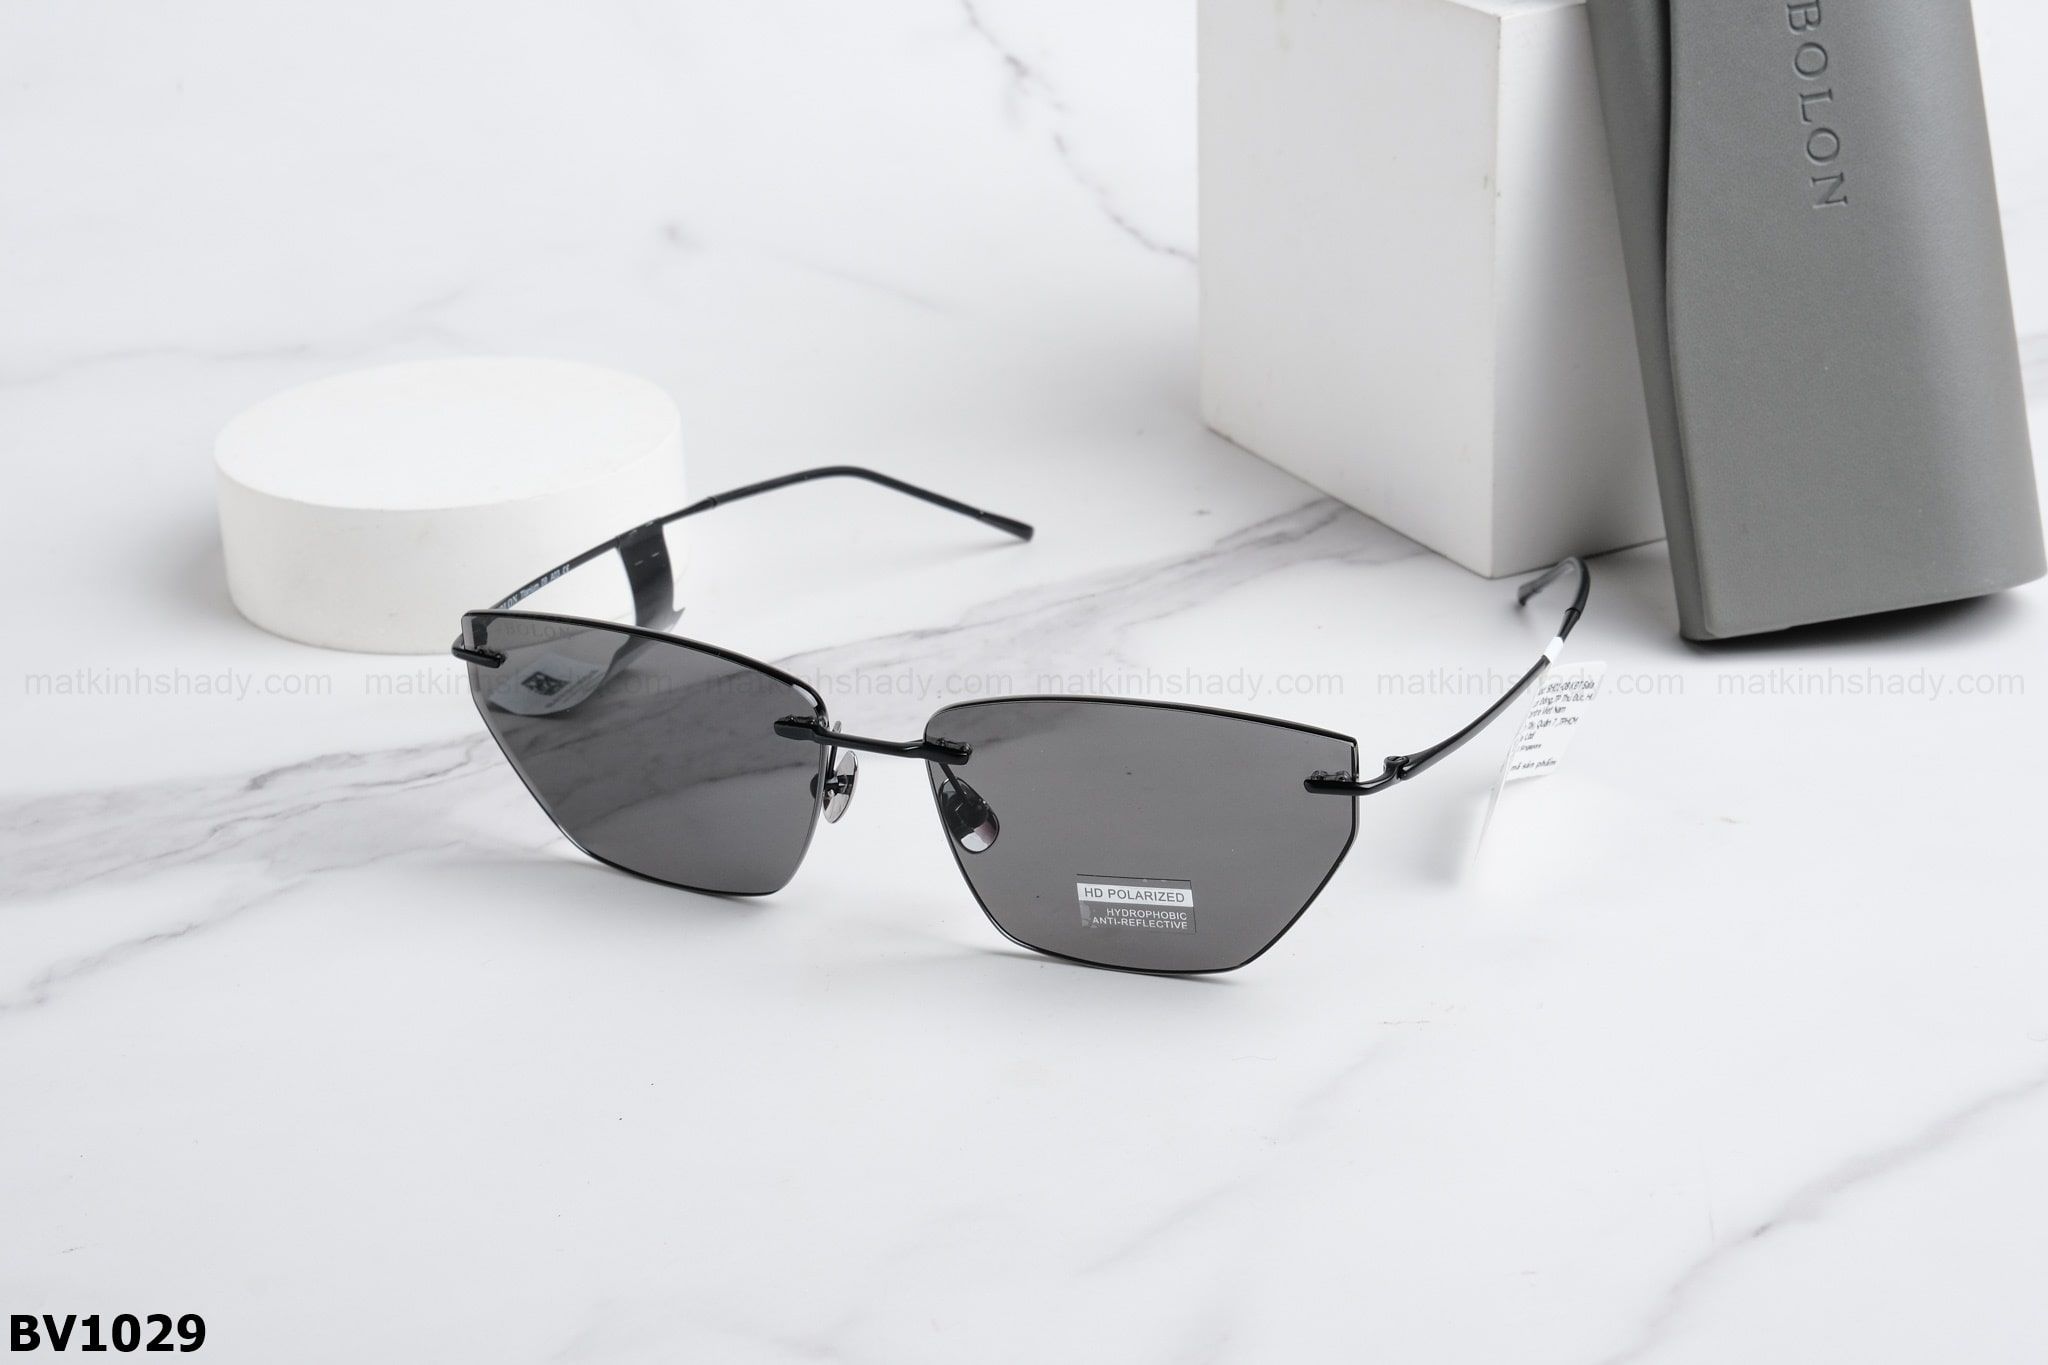  Bolon Eyewear - Sunglasses - BV1029 